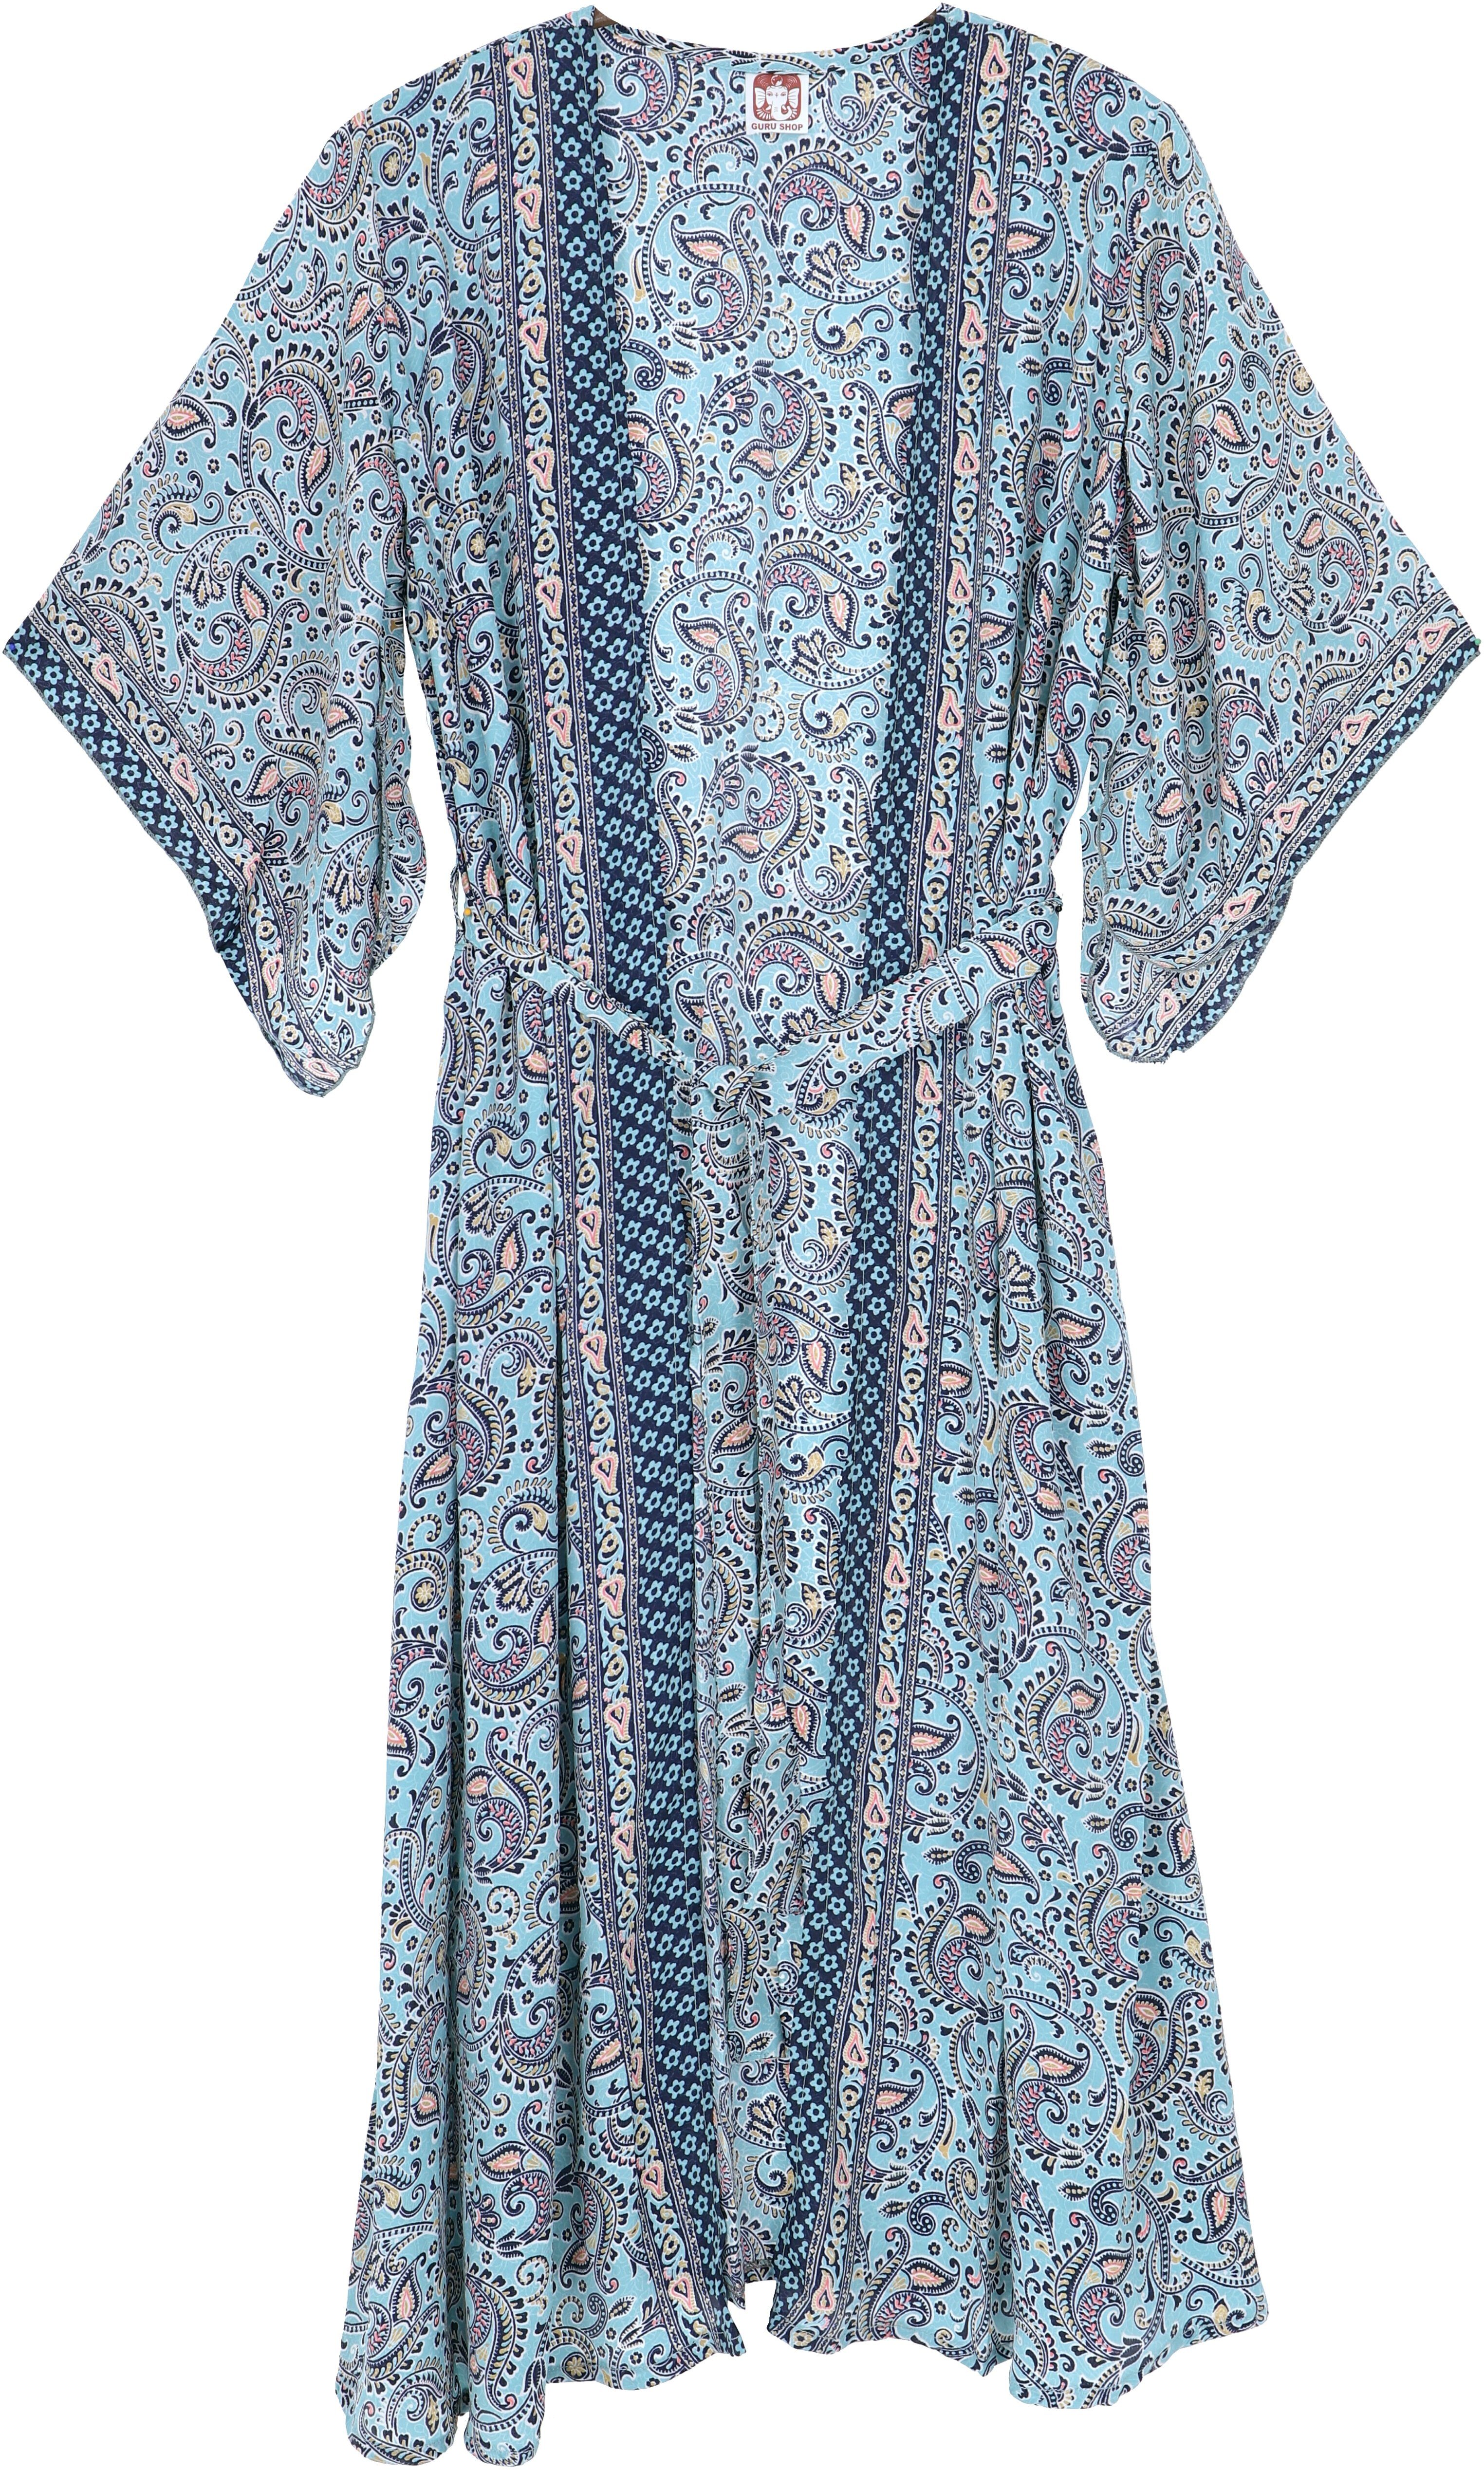 Guru-Shop Kimono Langer Kimono im Japan Style, Kimono Mantel,.., alternative Bekleidung blau